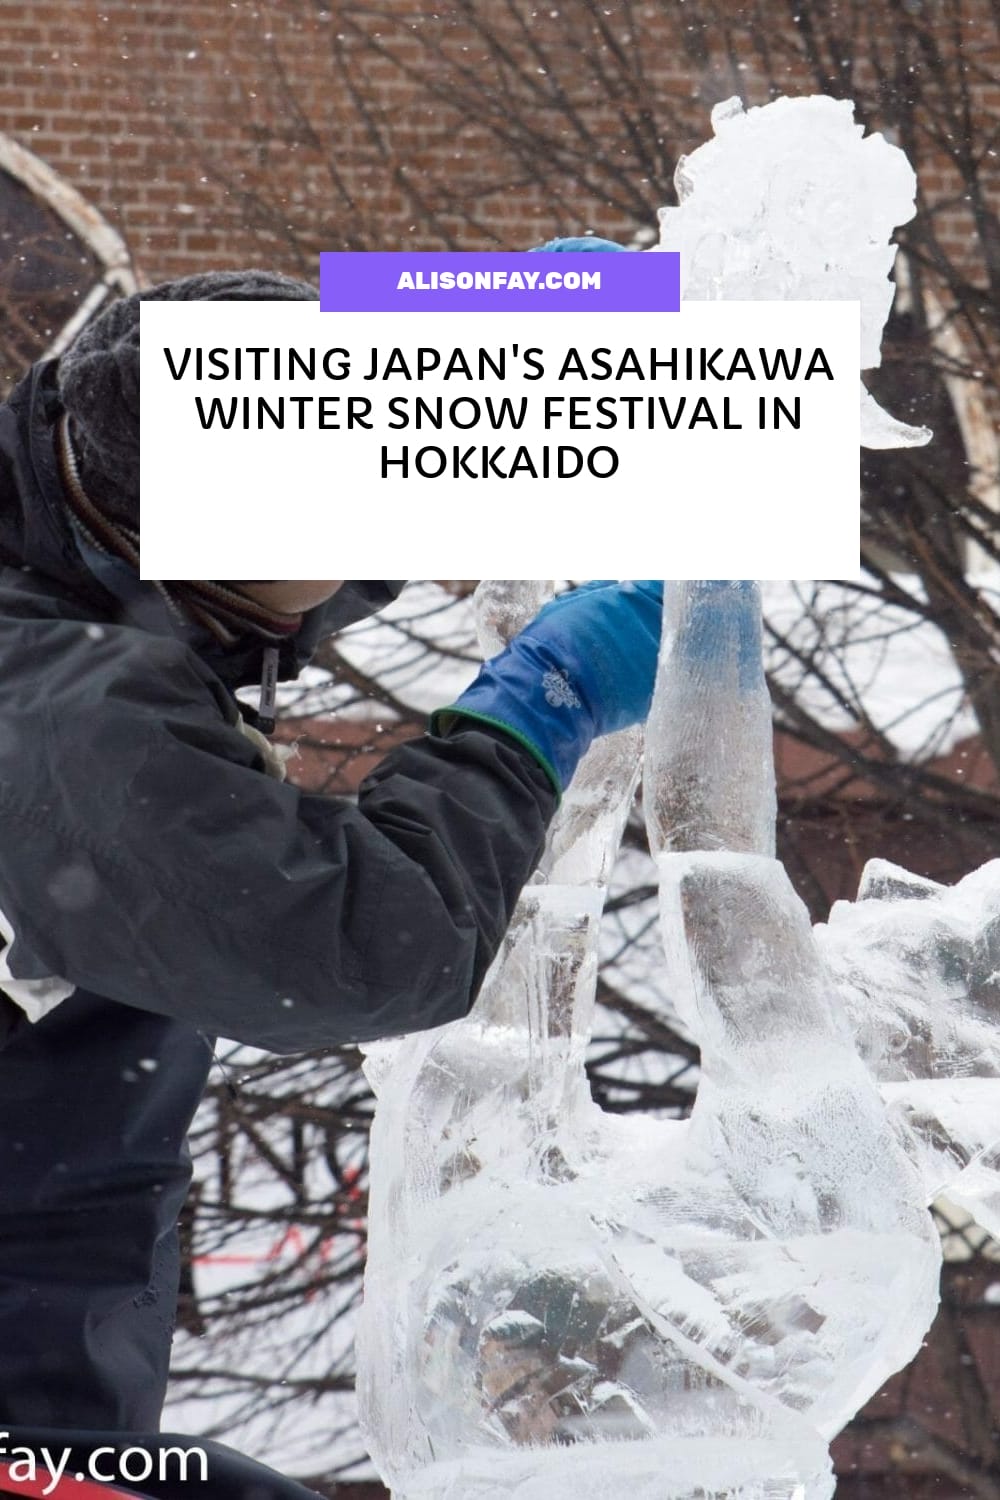 Visiting Japan’s Asahikawa Winter Snow Festival in Hokkaido